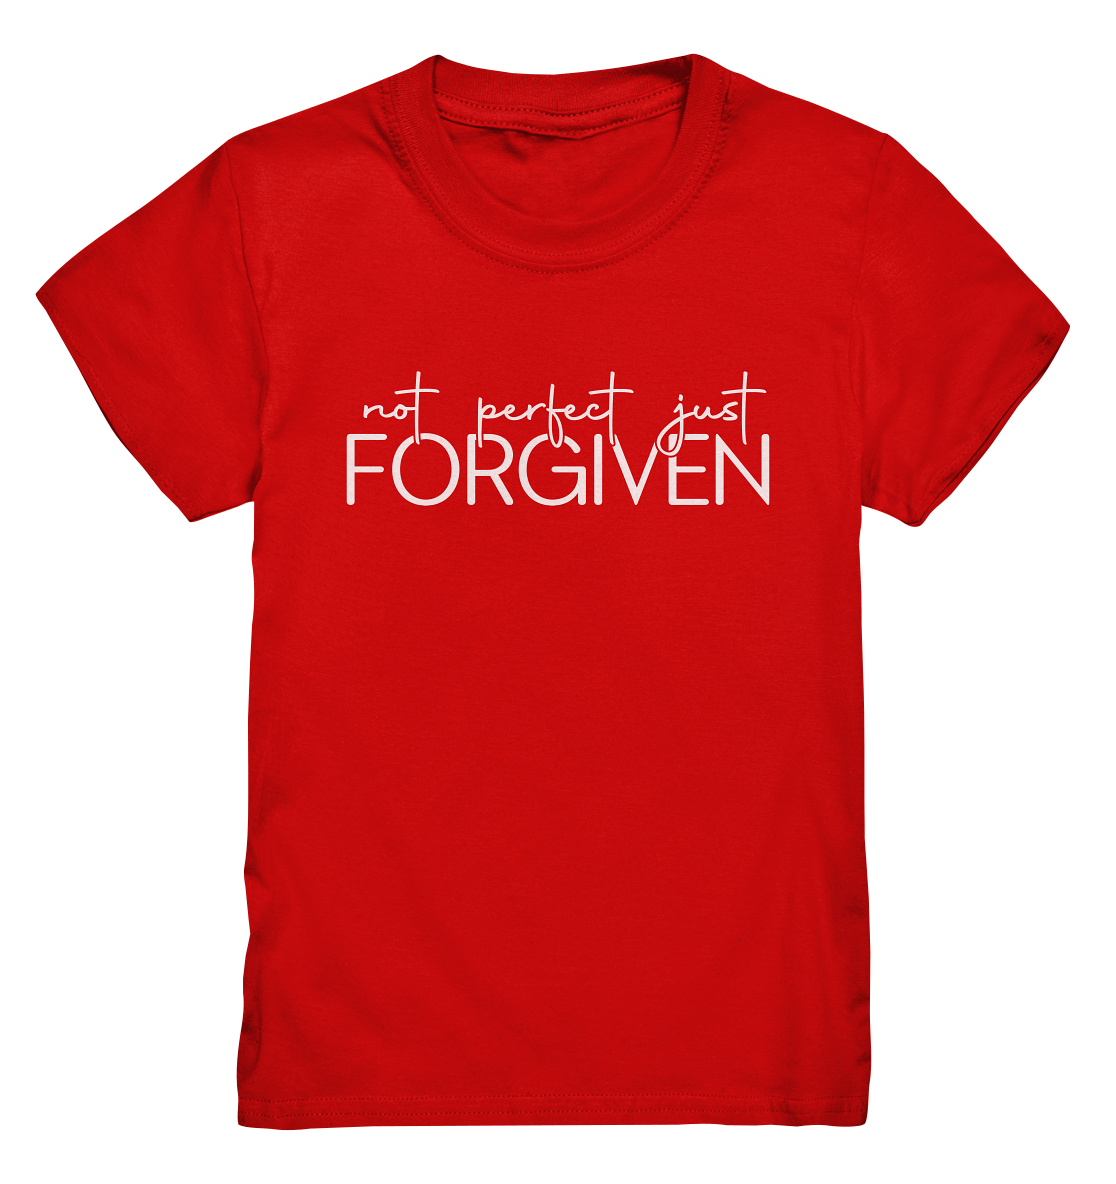 Not Perfect, Just Forgiven - Kids Premium Shirt